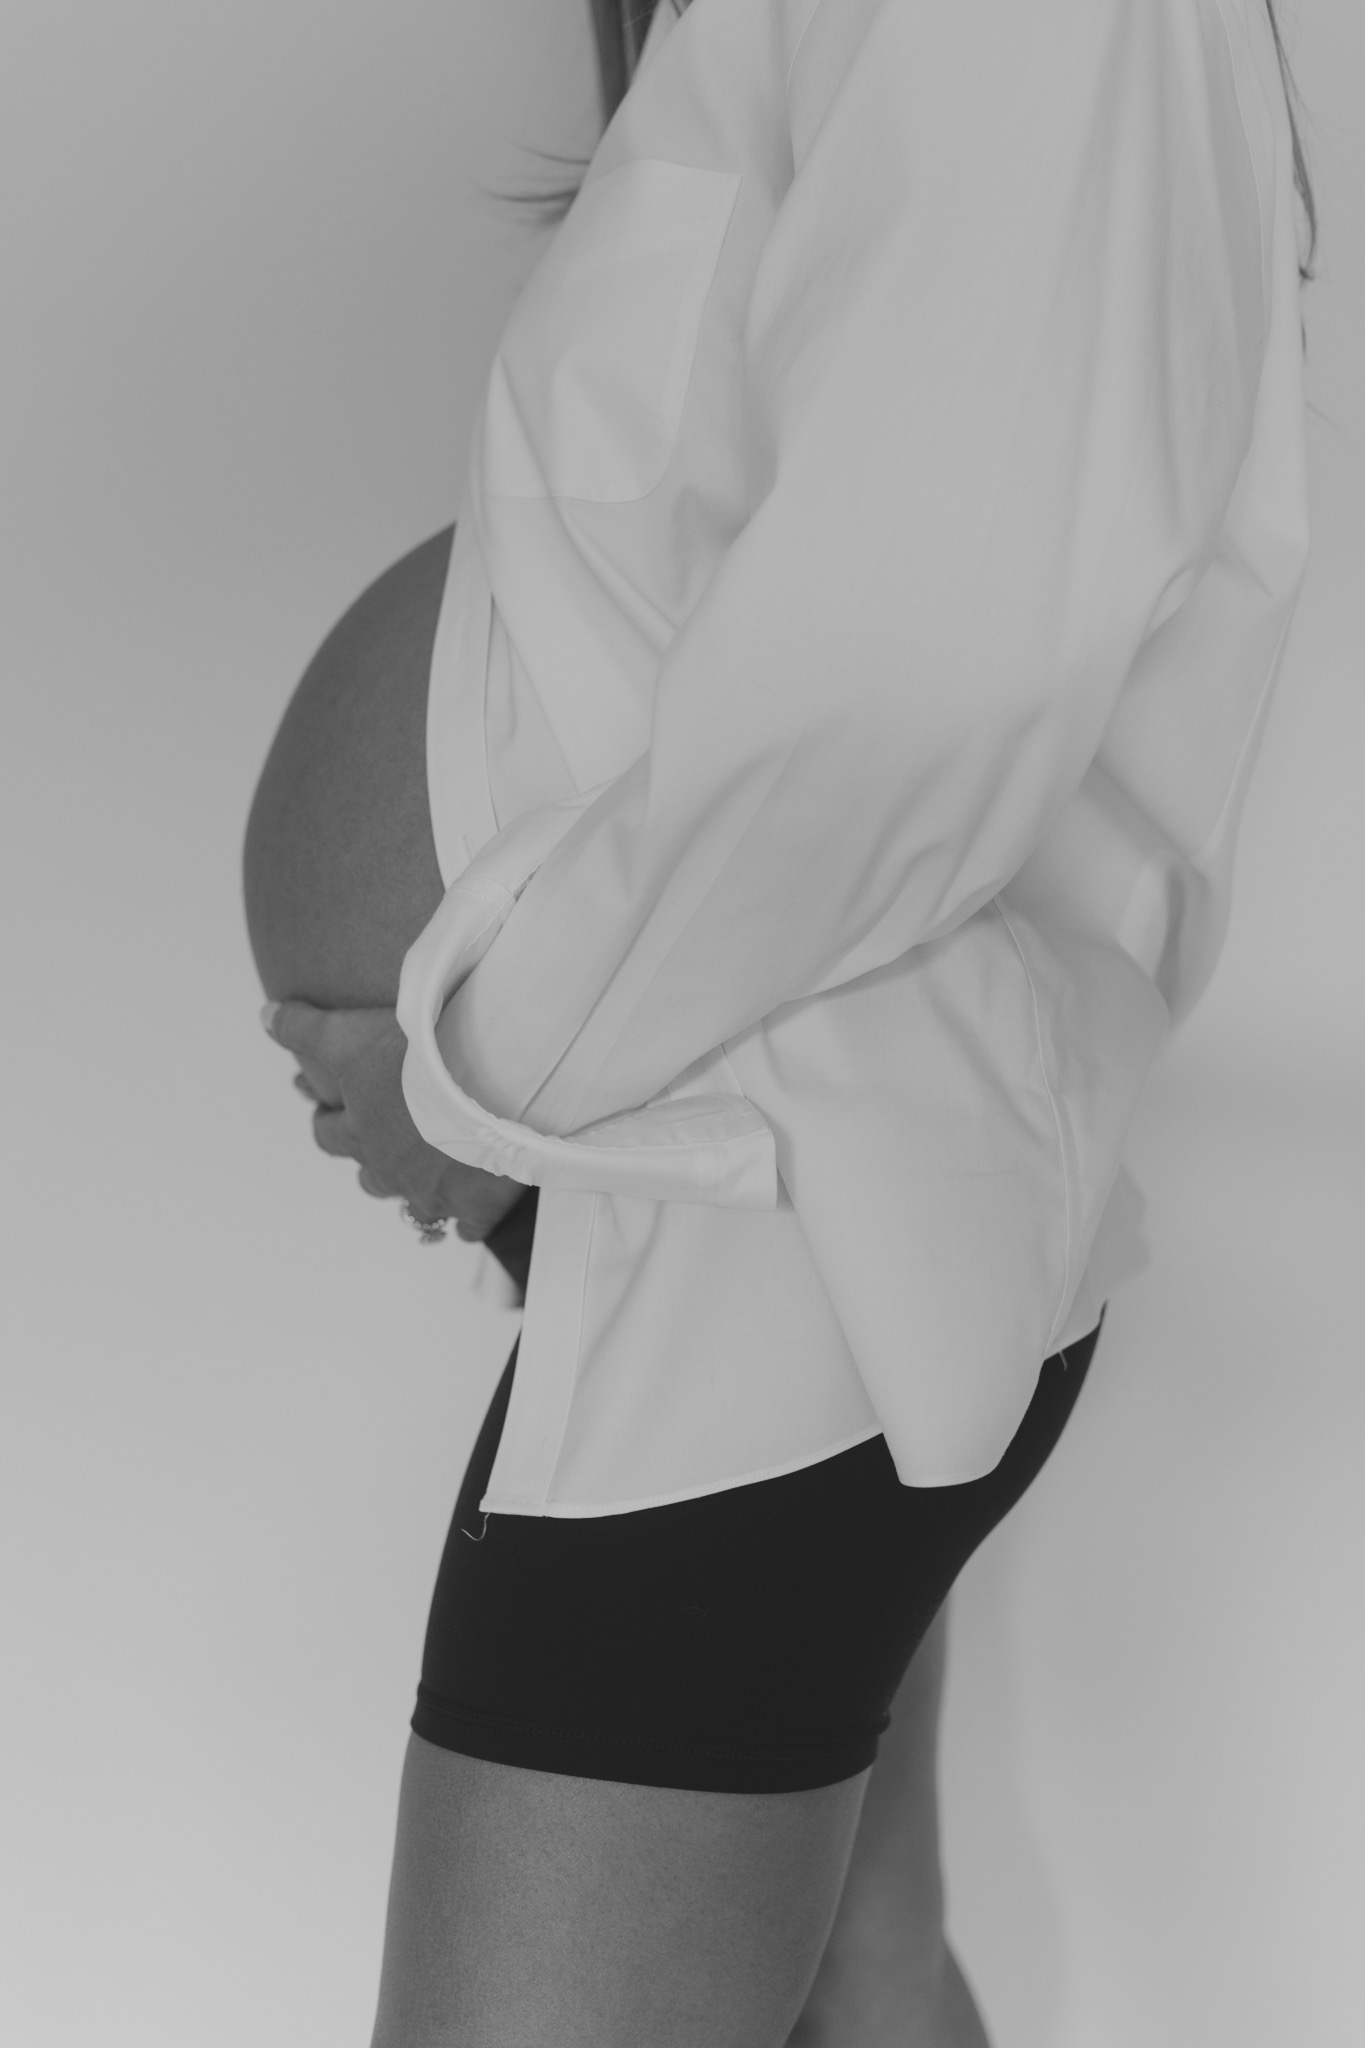 brighton butler maternity photo, black and white bump photo, 35 weeks pregnant maternity photo